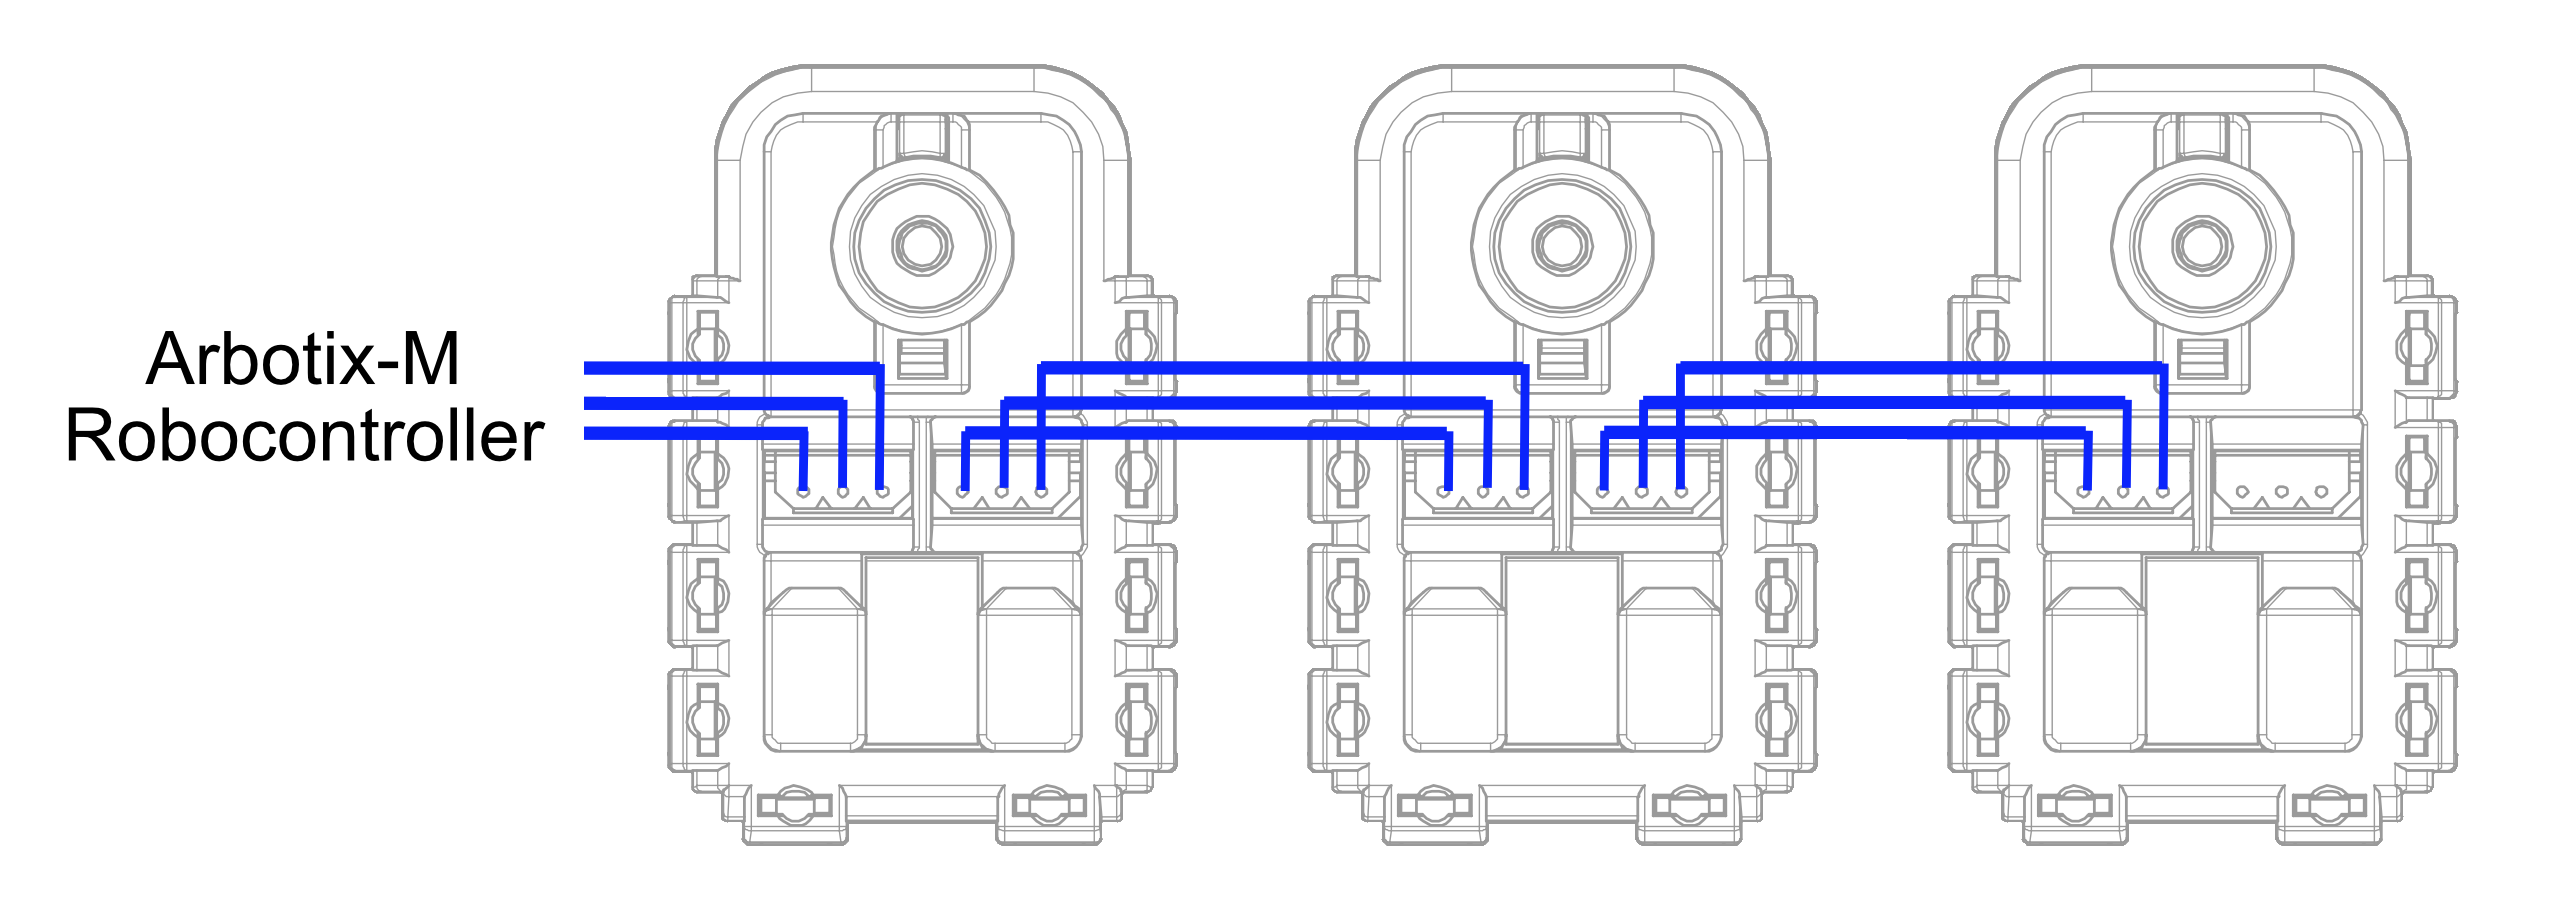 Diagram of chain of Dynamixel servos